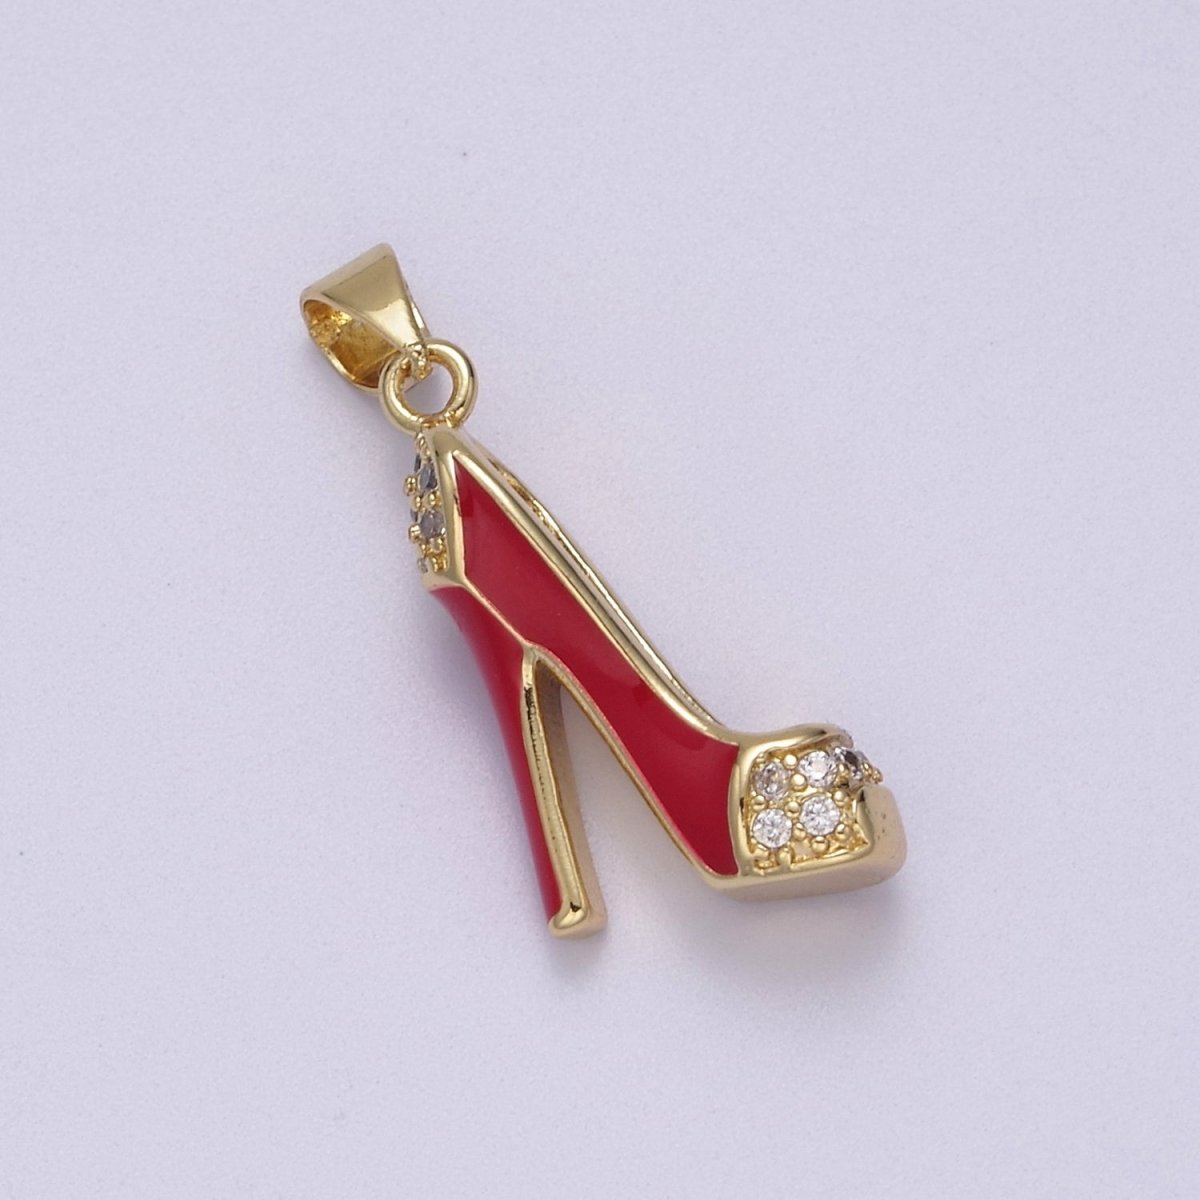 Red high heeled stiletto shoe charm pendant for Bracelet Necklace Earring J-352 - DLUXCA